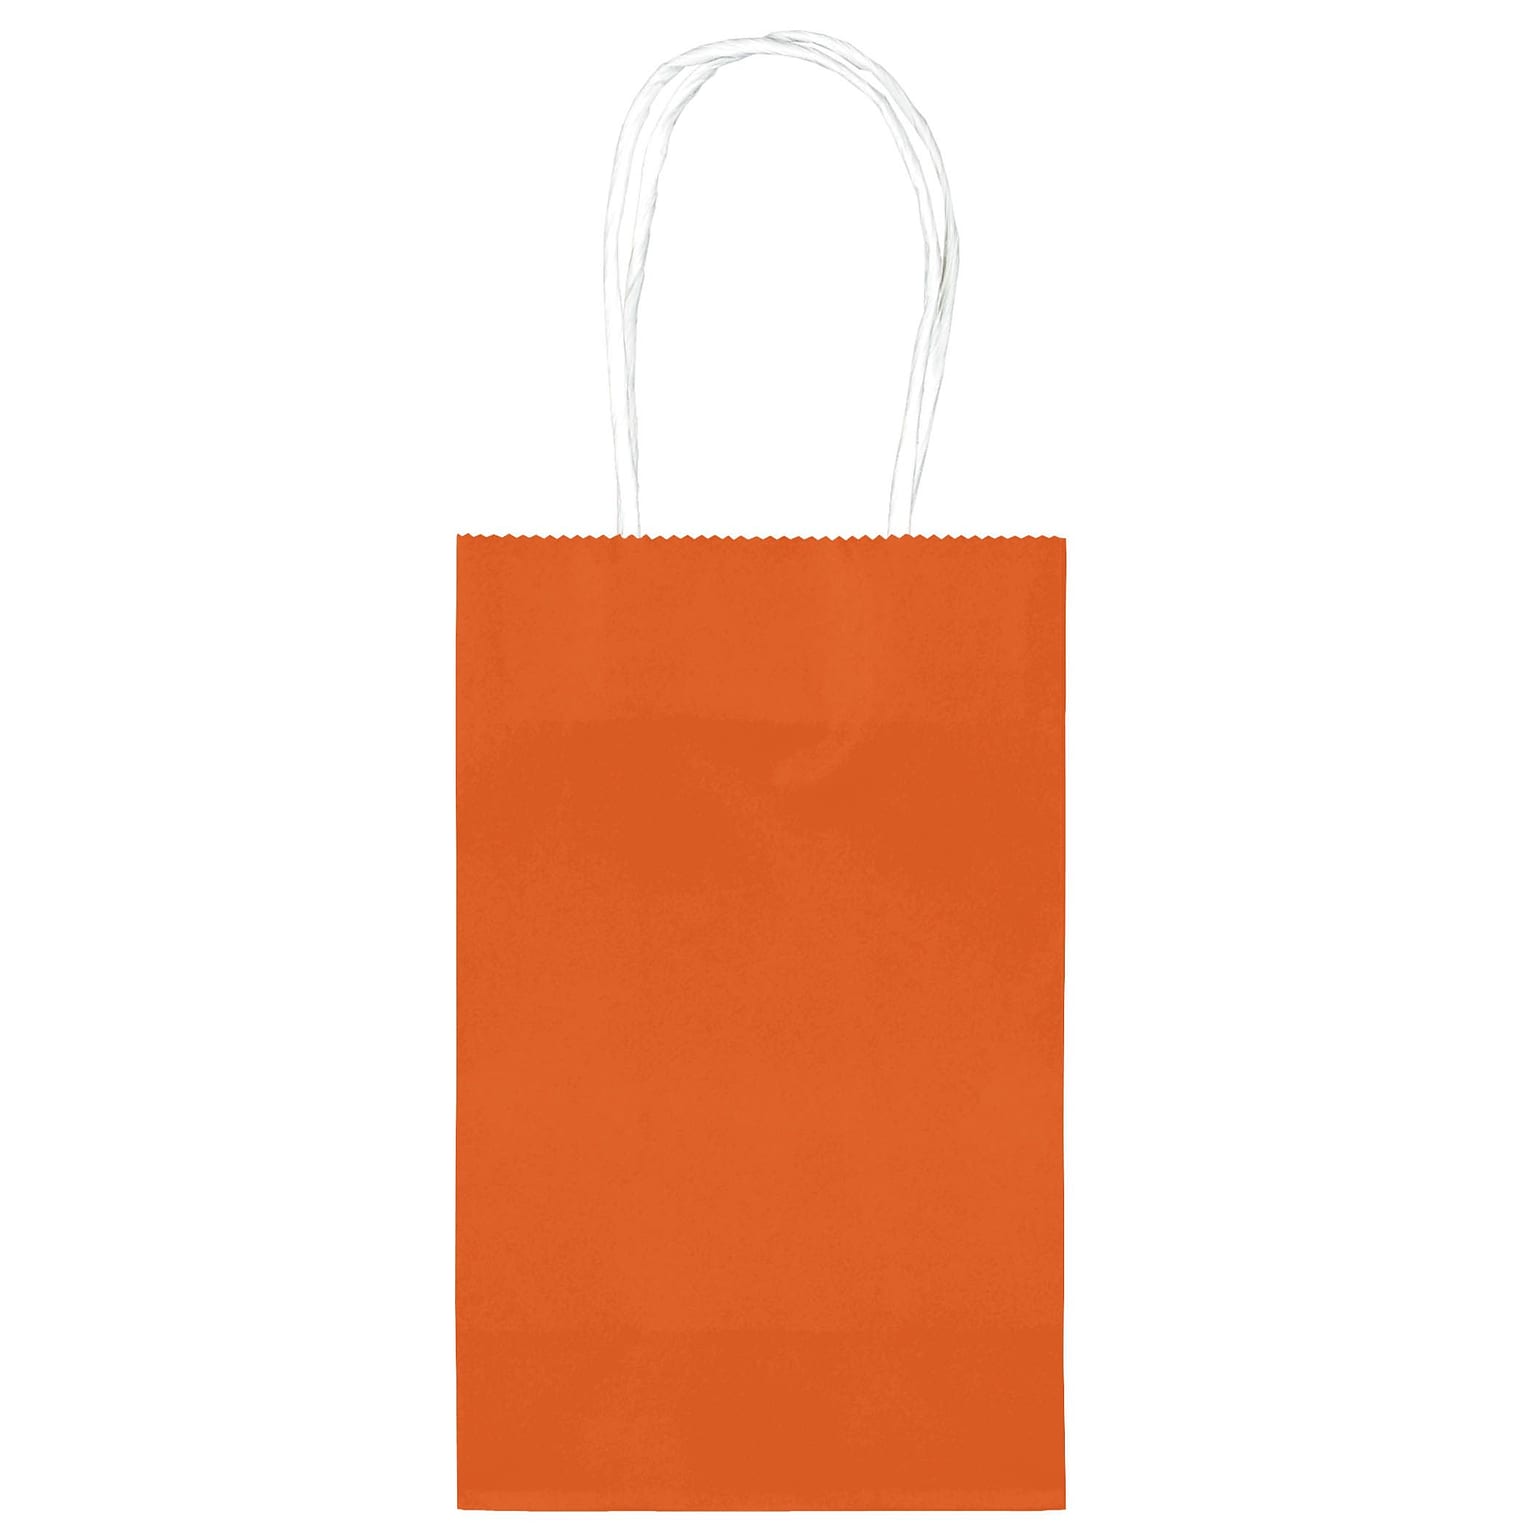 Amscan Cub Bags Value Pack, Orange Peel, 4 Bags/Pack (162500.05)